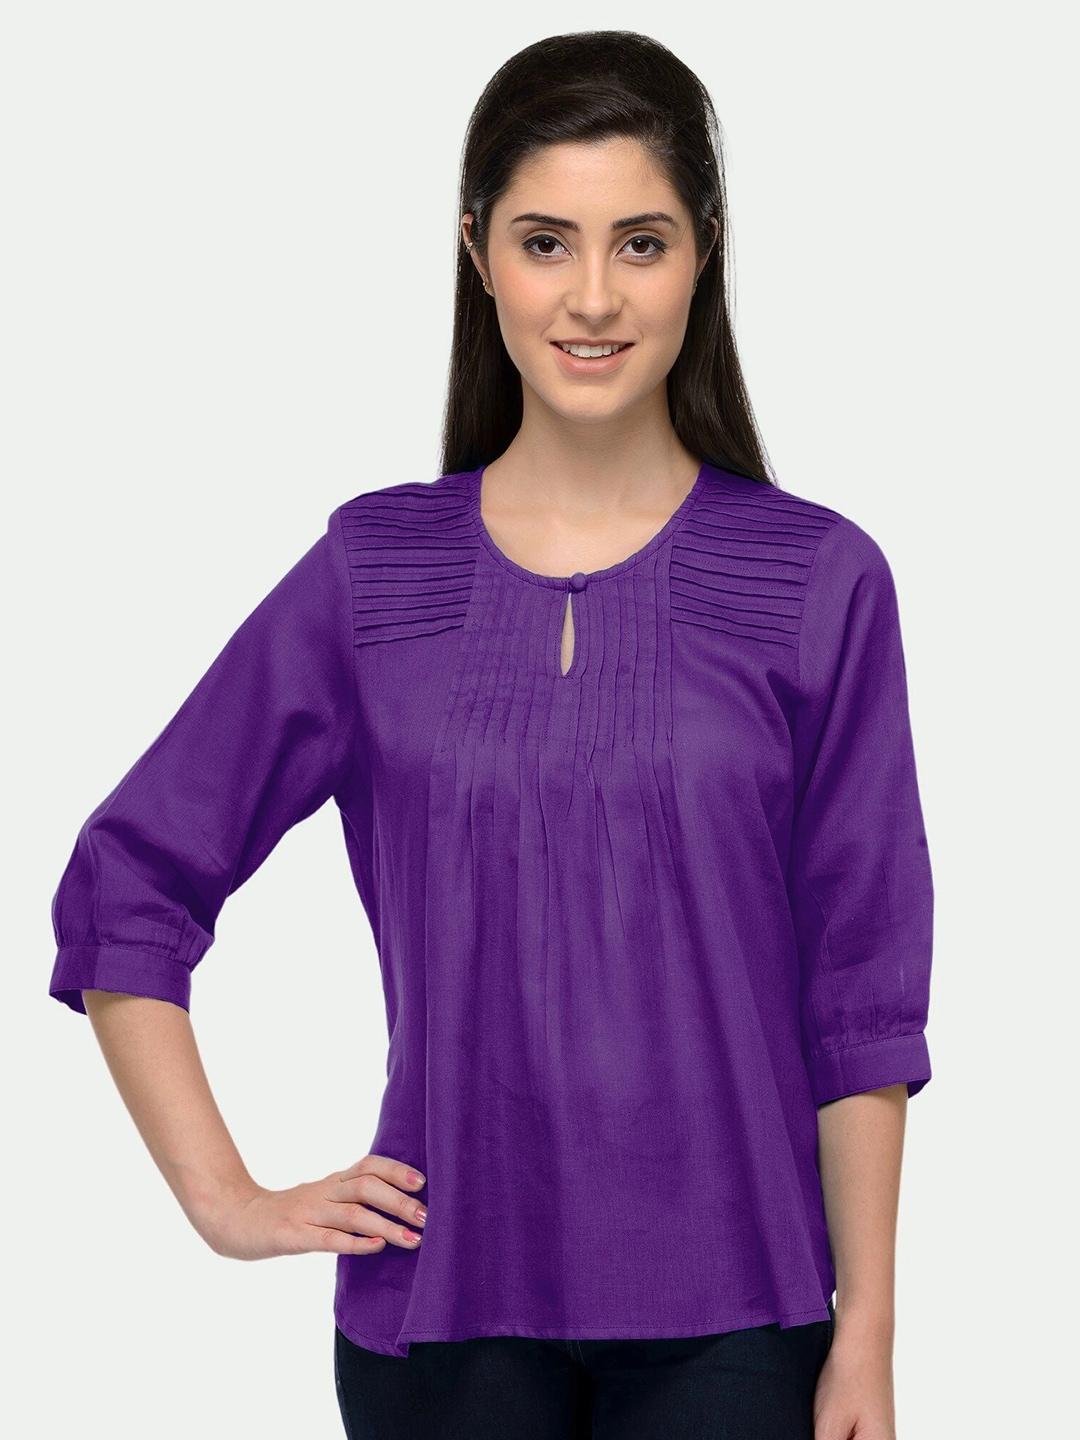 patrorna-women-purple-solid-pleated-keyhole-neck-top